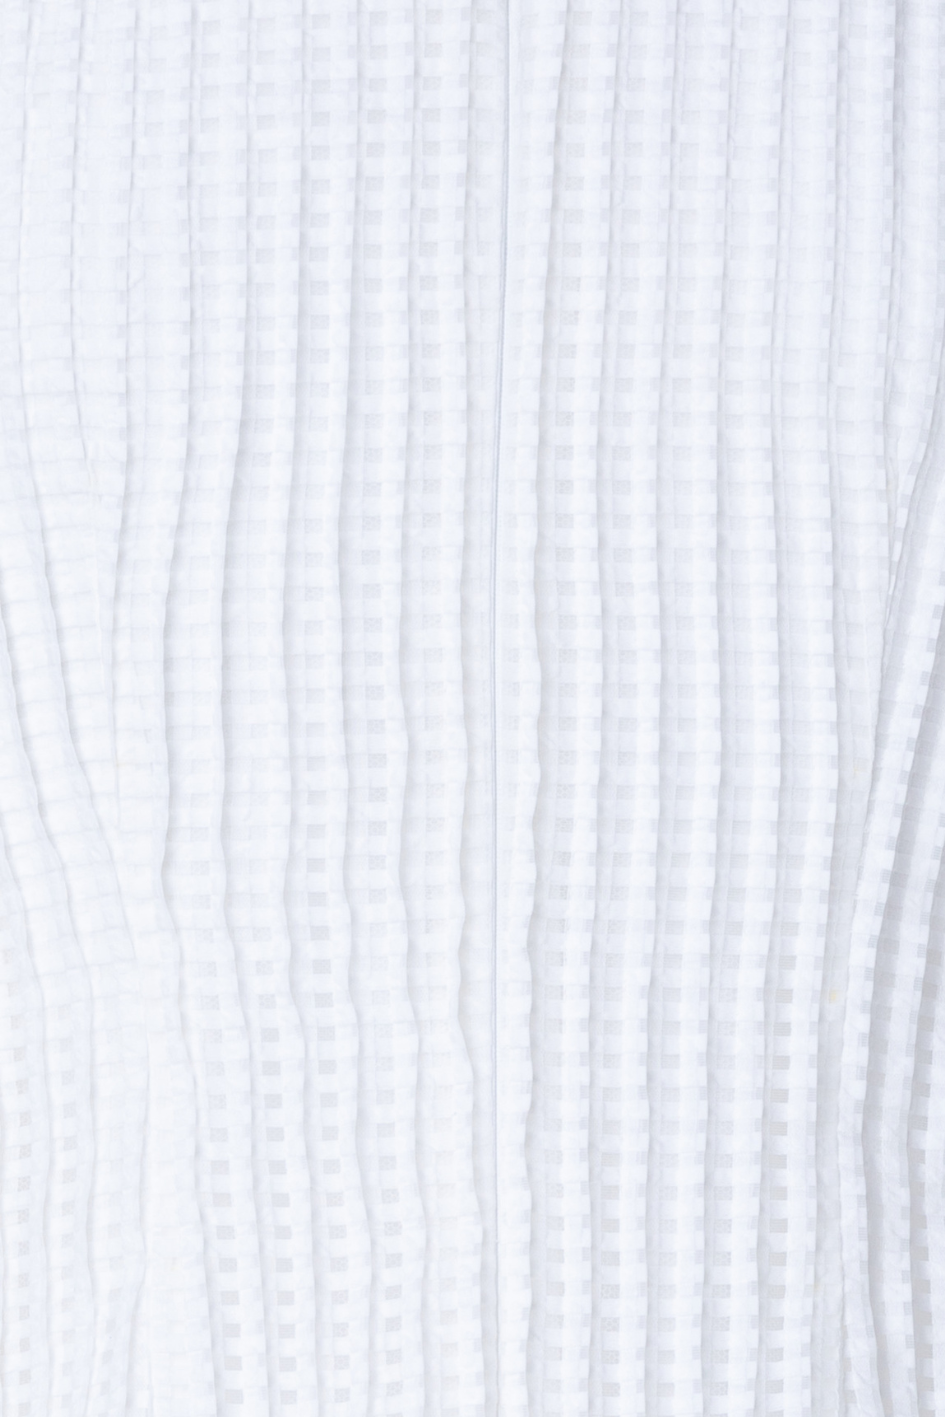 Kurzes ärmelloses Kleid mit Faltenrock aus leicht transparentem Organza